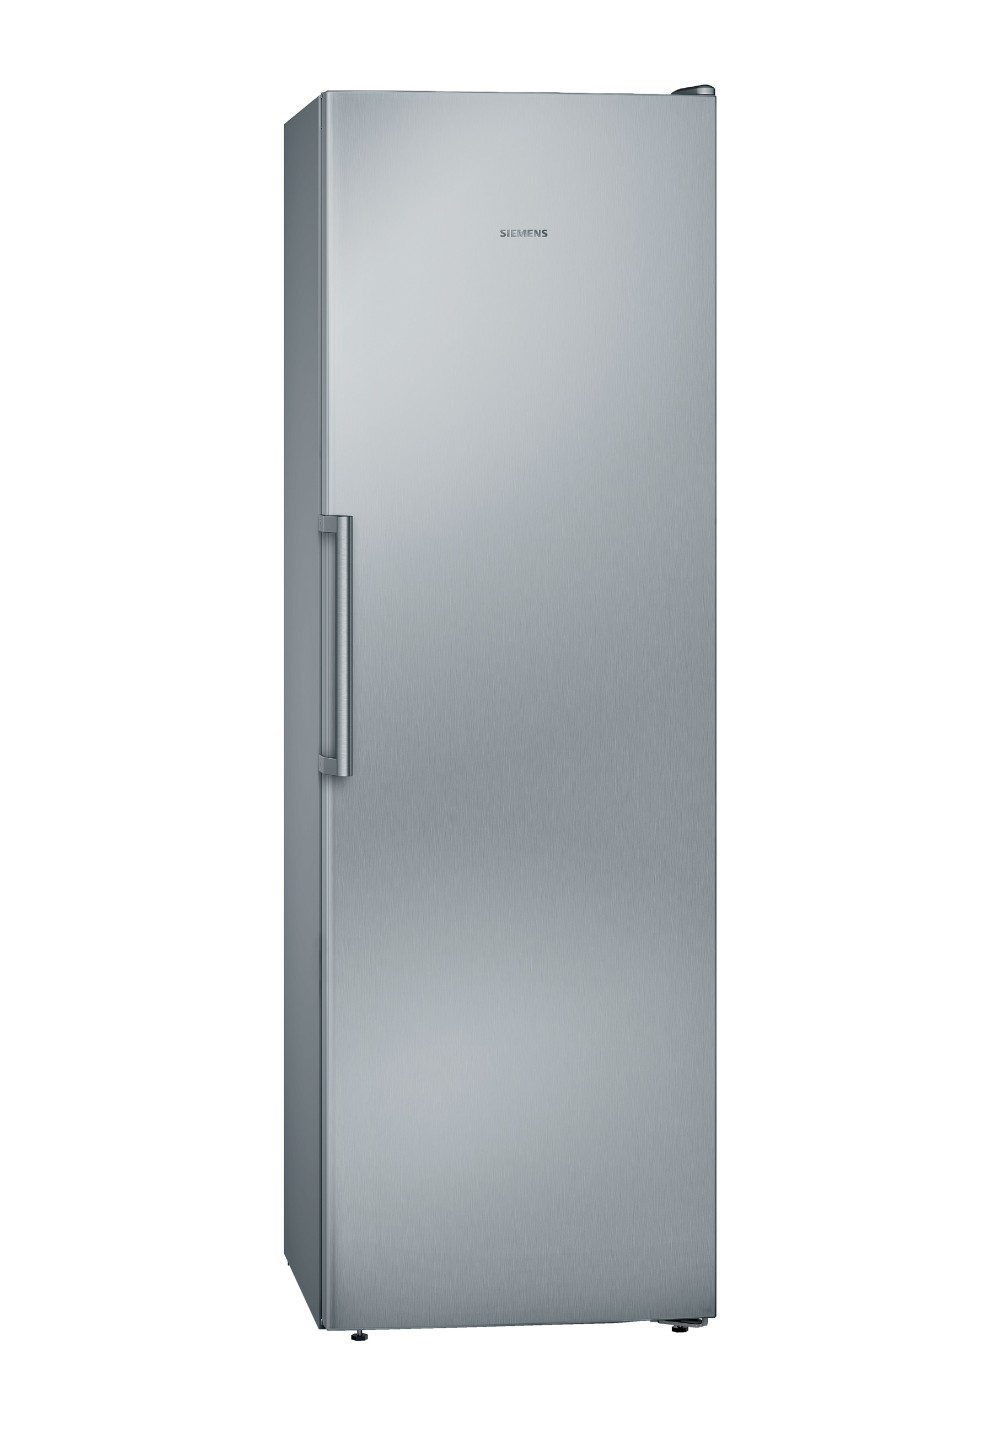 Siemens iQ300 GS36NVIEV Freestanding Freezer featured image